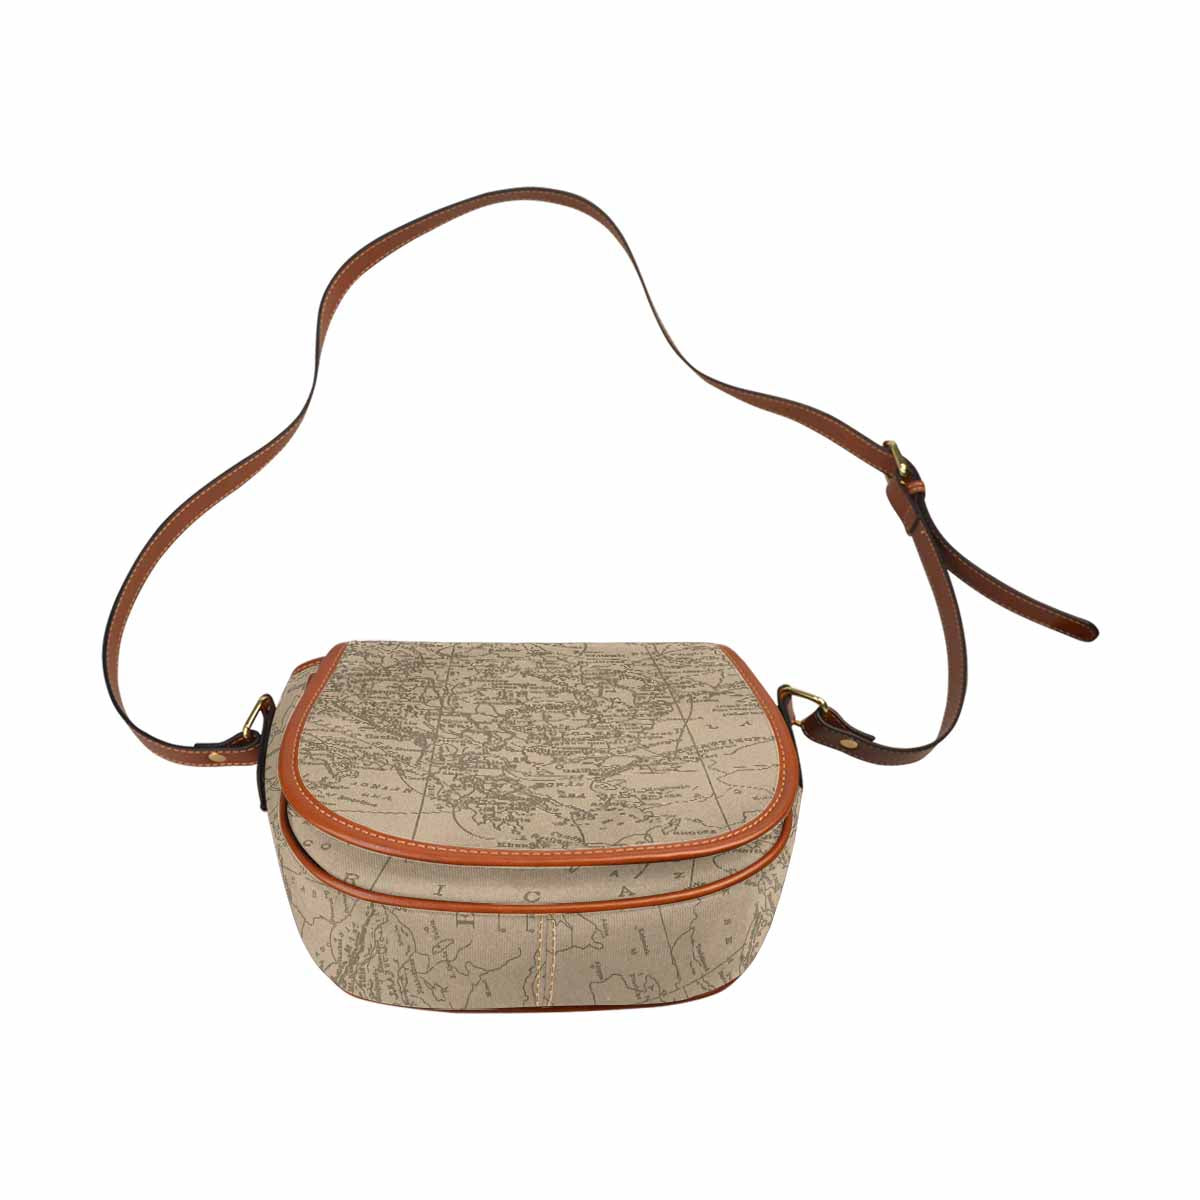 Antique Map design Handbag, saddle bag, Design 54